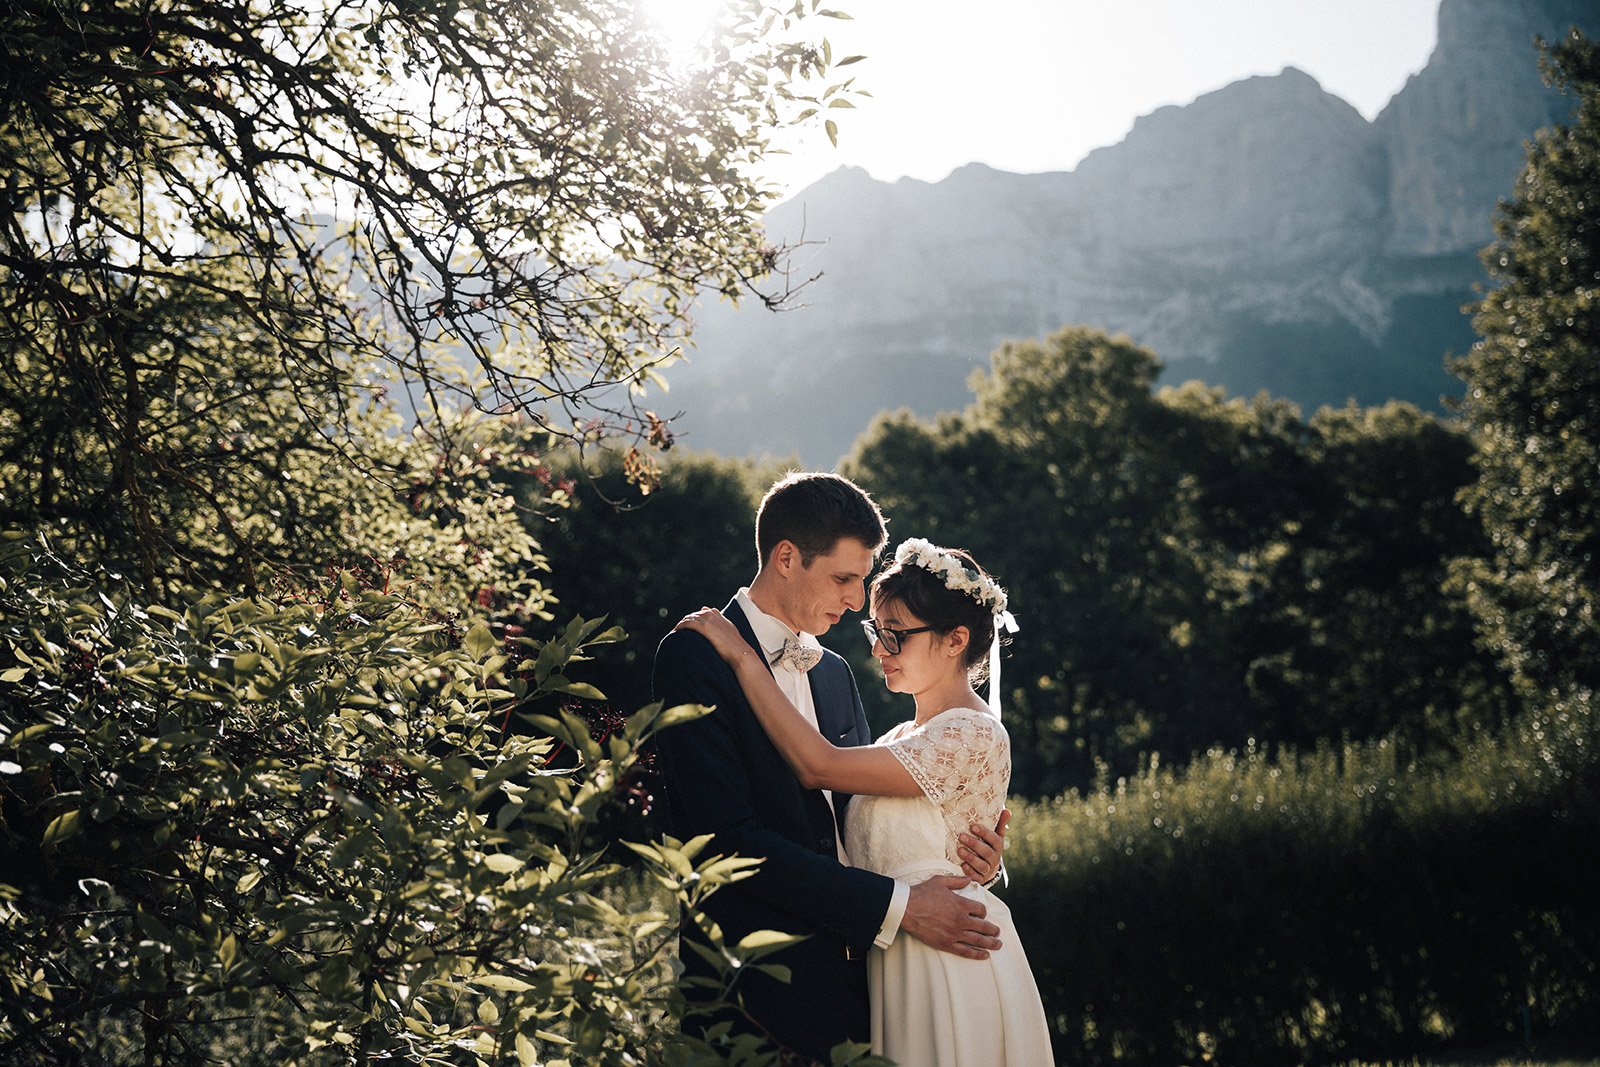 Photographe de mariage Isère Alpes Montagne Wedding photographer in the High Alps